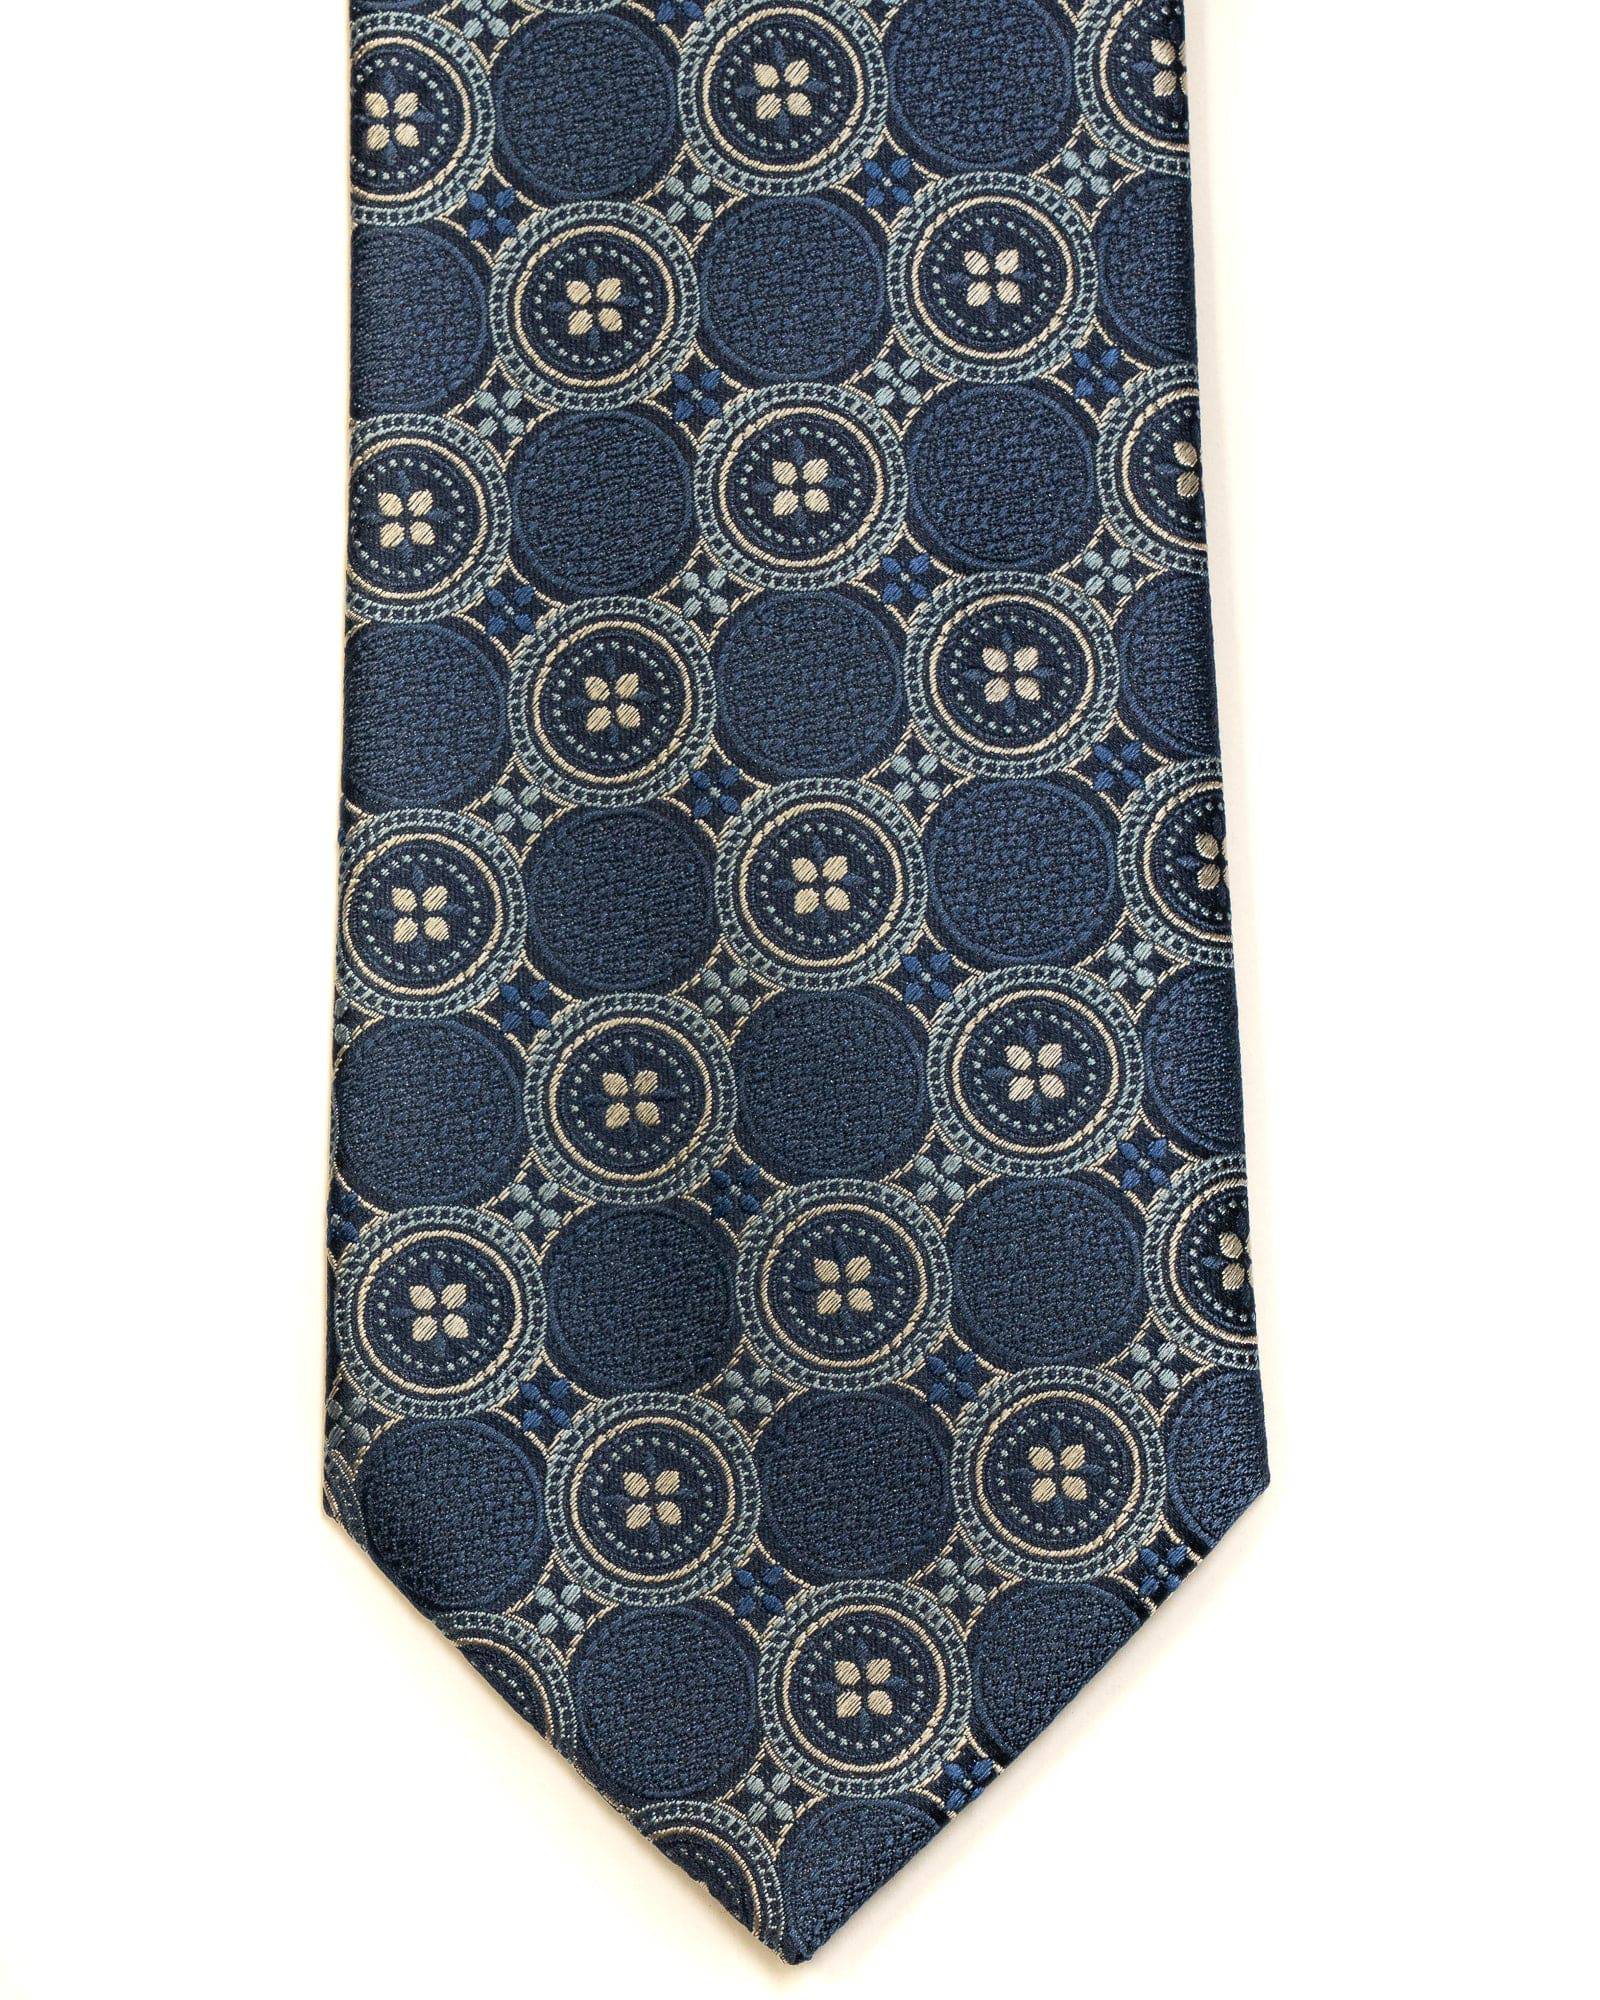 Silk Tie in Blue With Tan Foulard Print - Rainwater's Men's Clothing and Tuxedo Rental